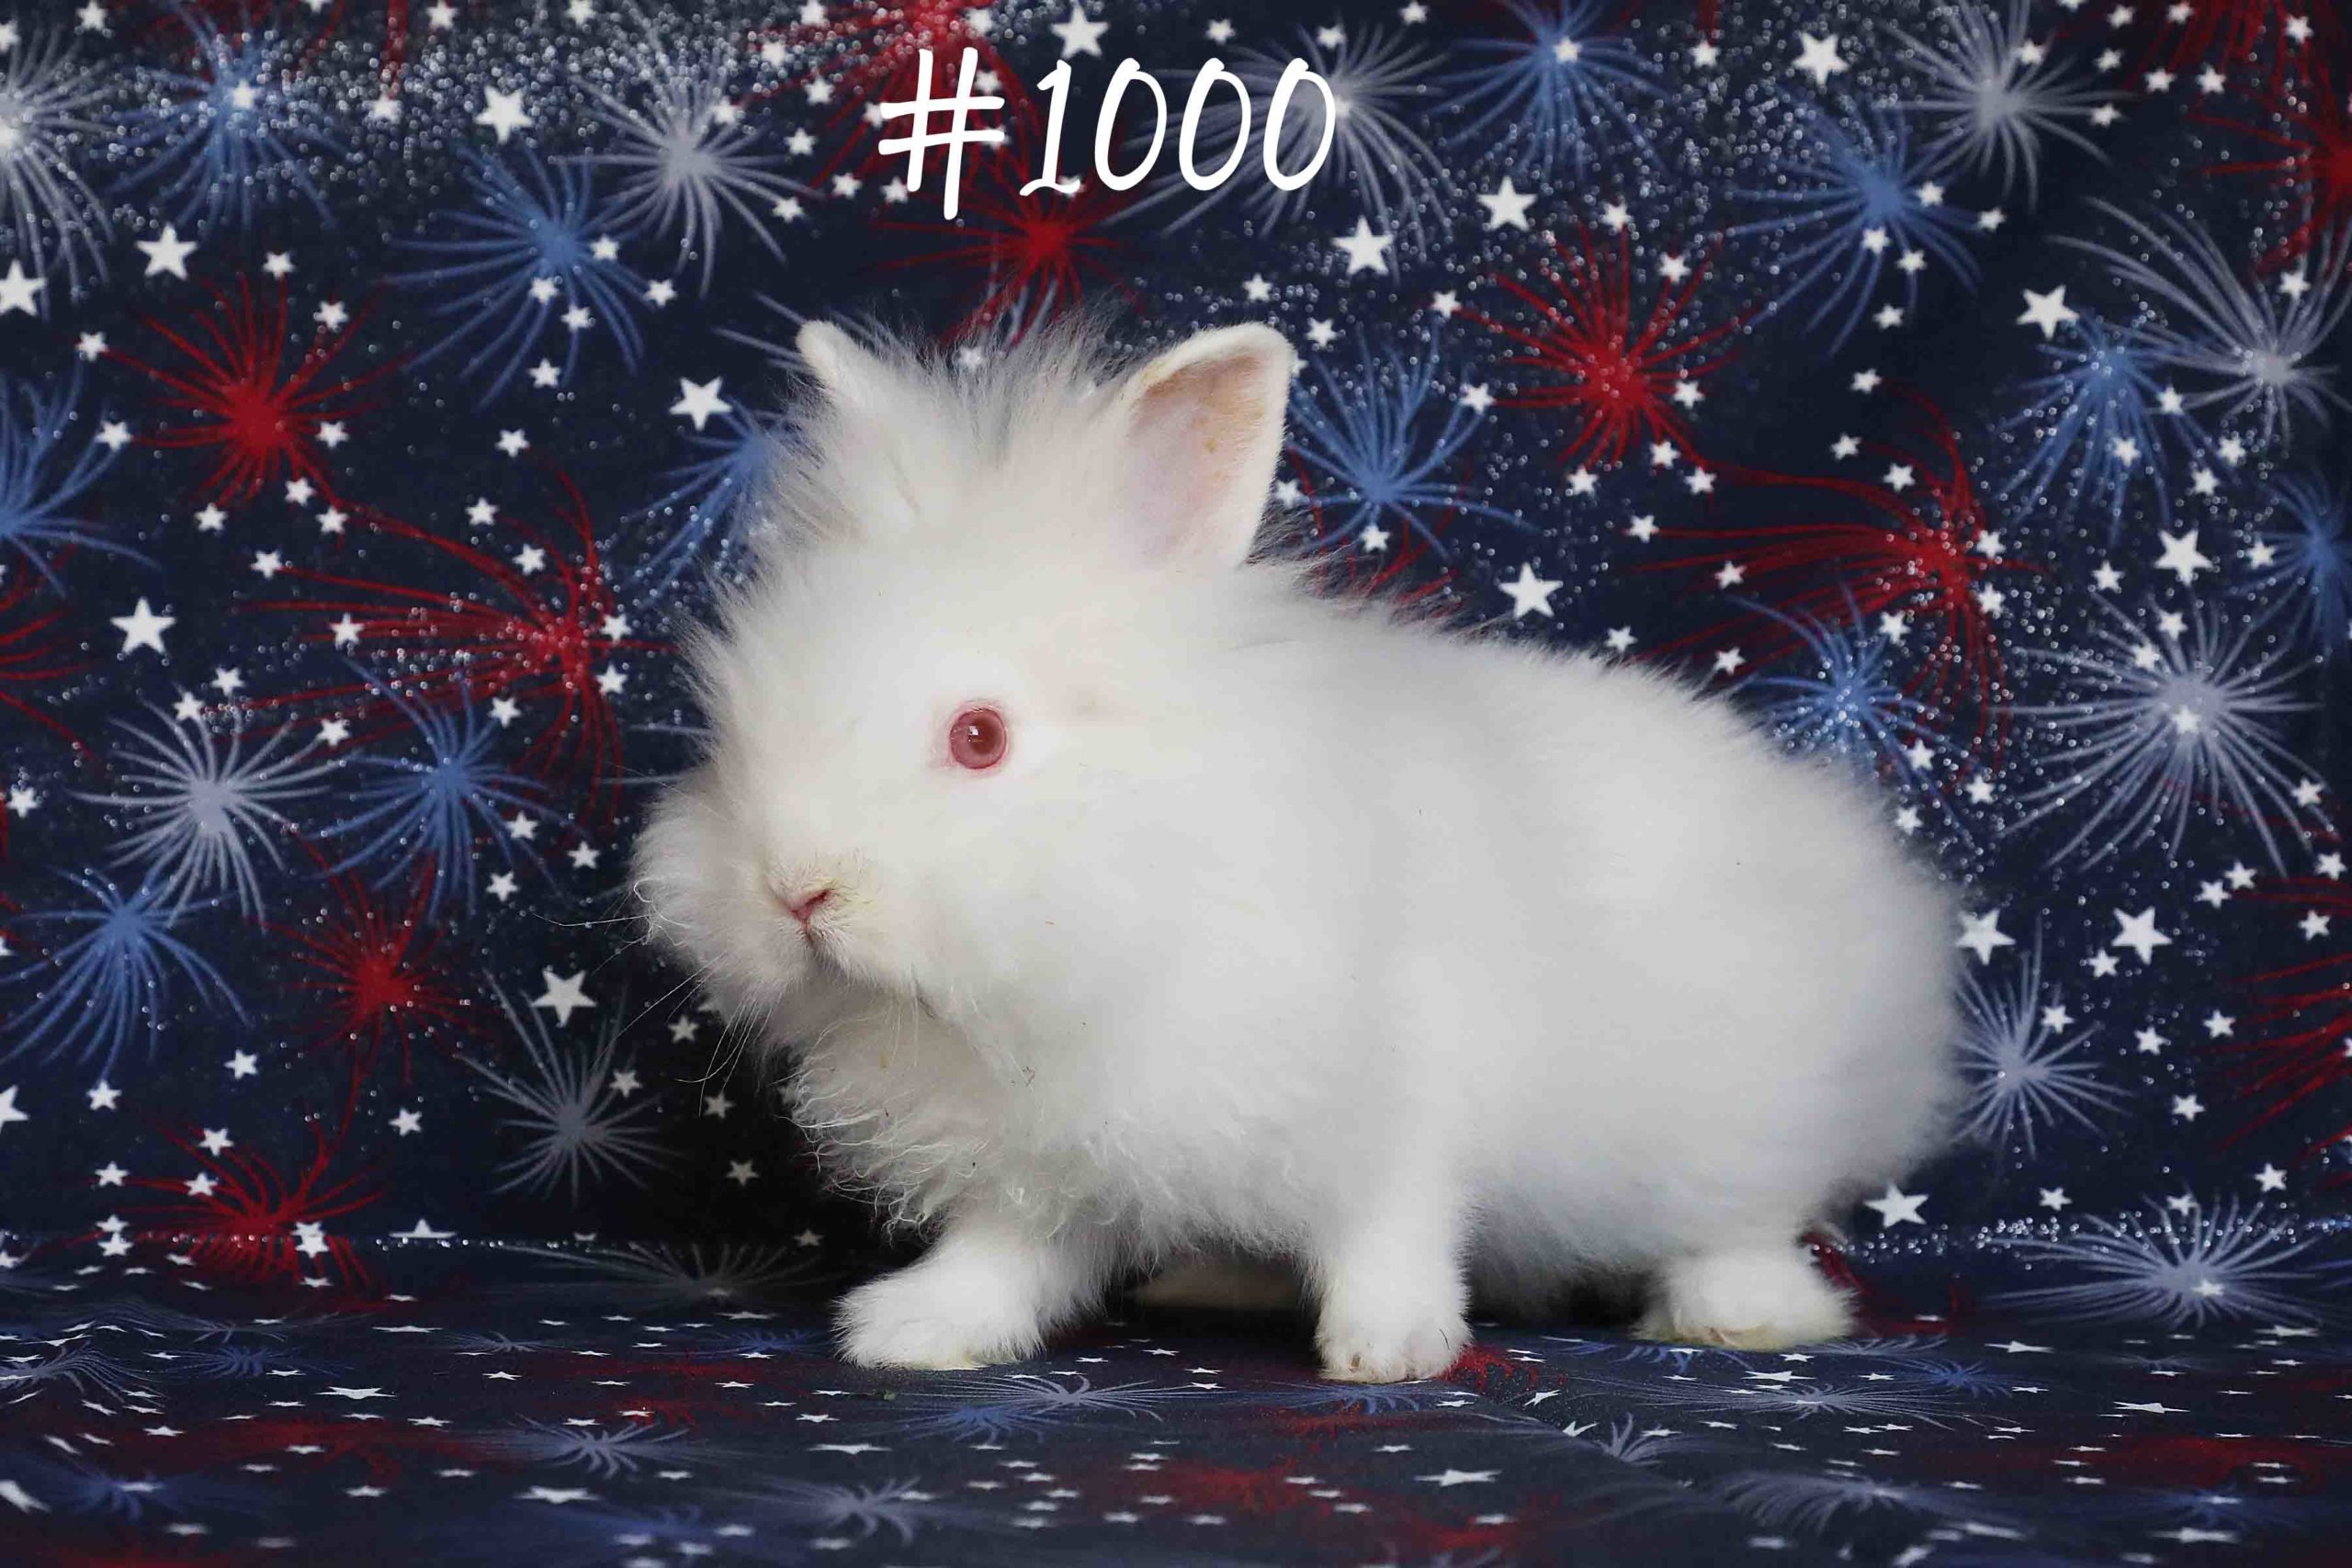 Chanan is Dad's 1000th rabbit adoption portrait. 